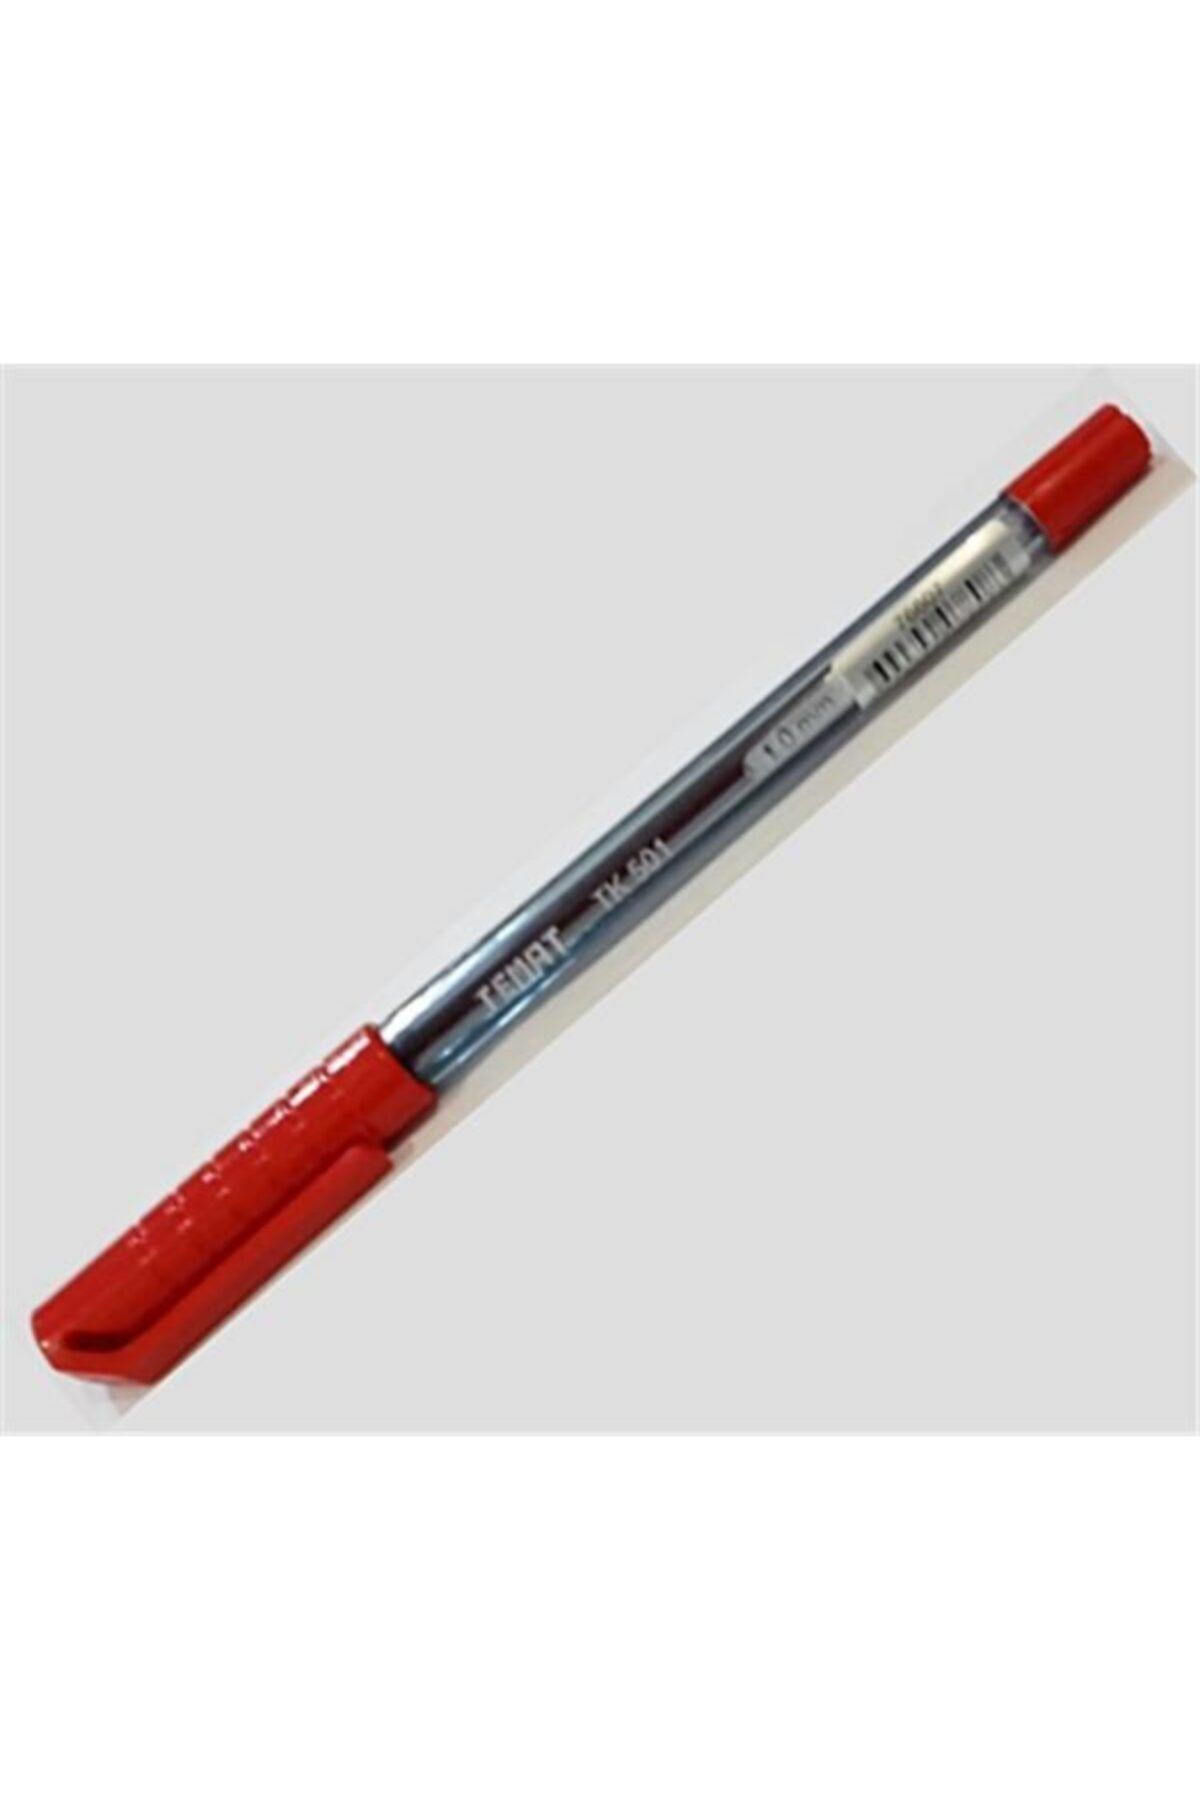 Temat Tükenmez Kalem 1.0 Mm Kırmızı Tk501 Tekli (1 Adet)